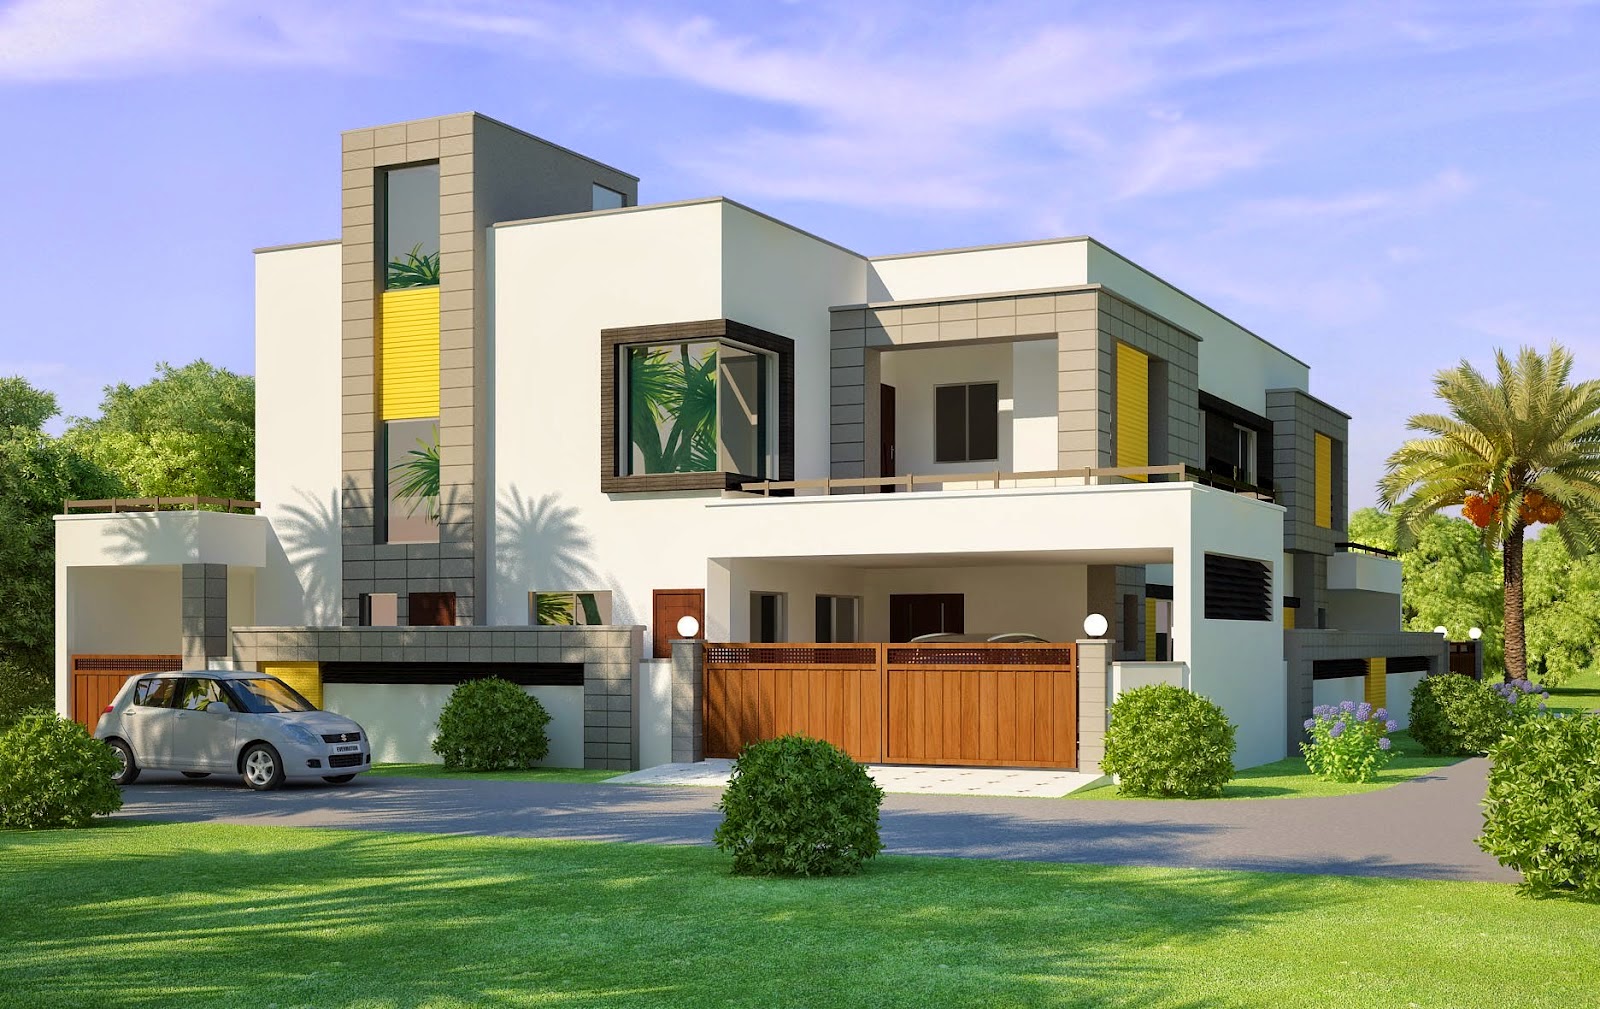 Best Home Design In India | www.cintronbeveragegroup.com